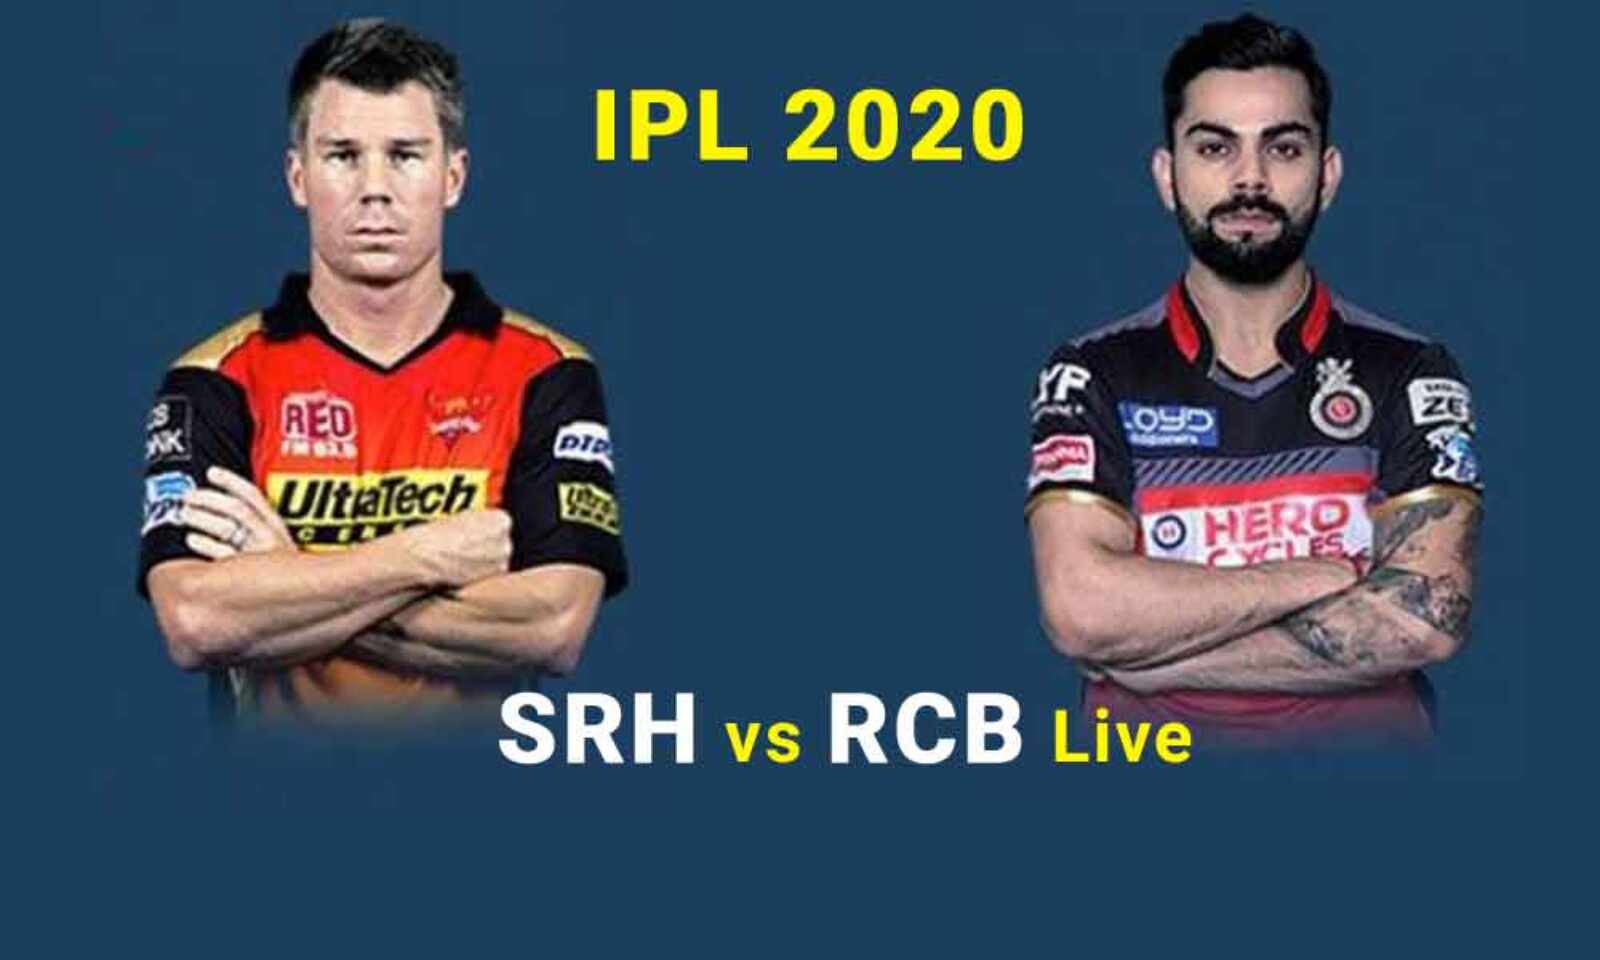 SRH vs RCB Live Score IPL 2020 updates Bangalore win by 10 runs